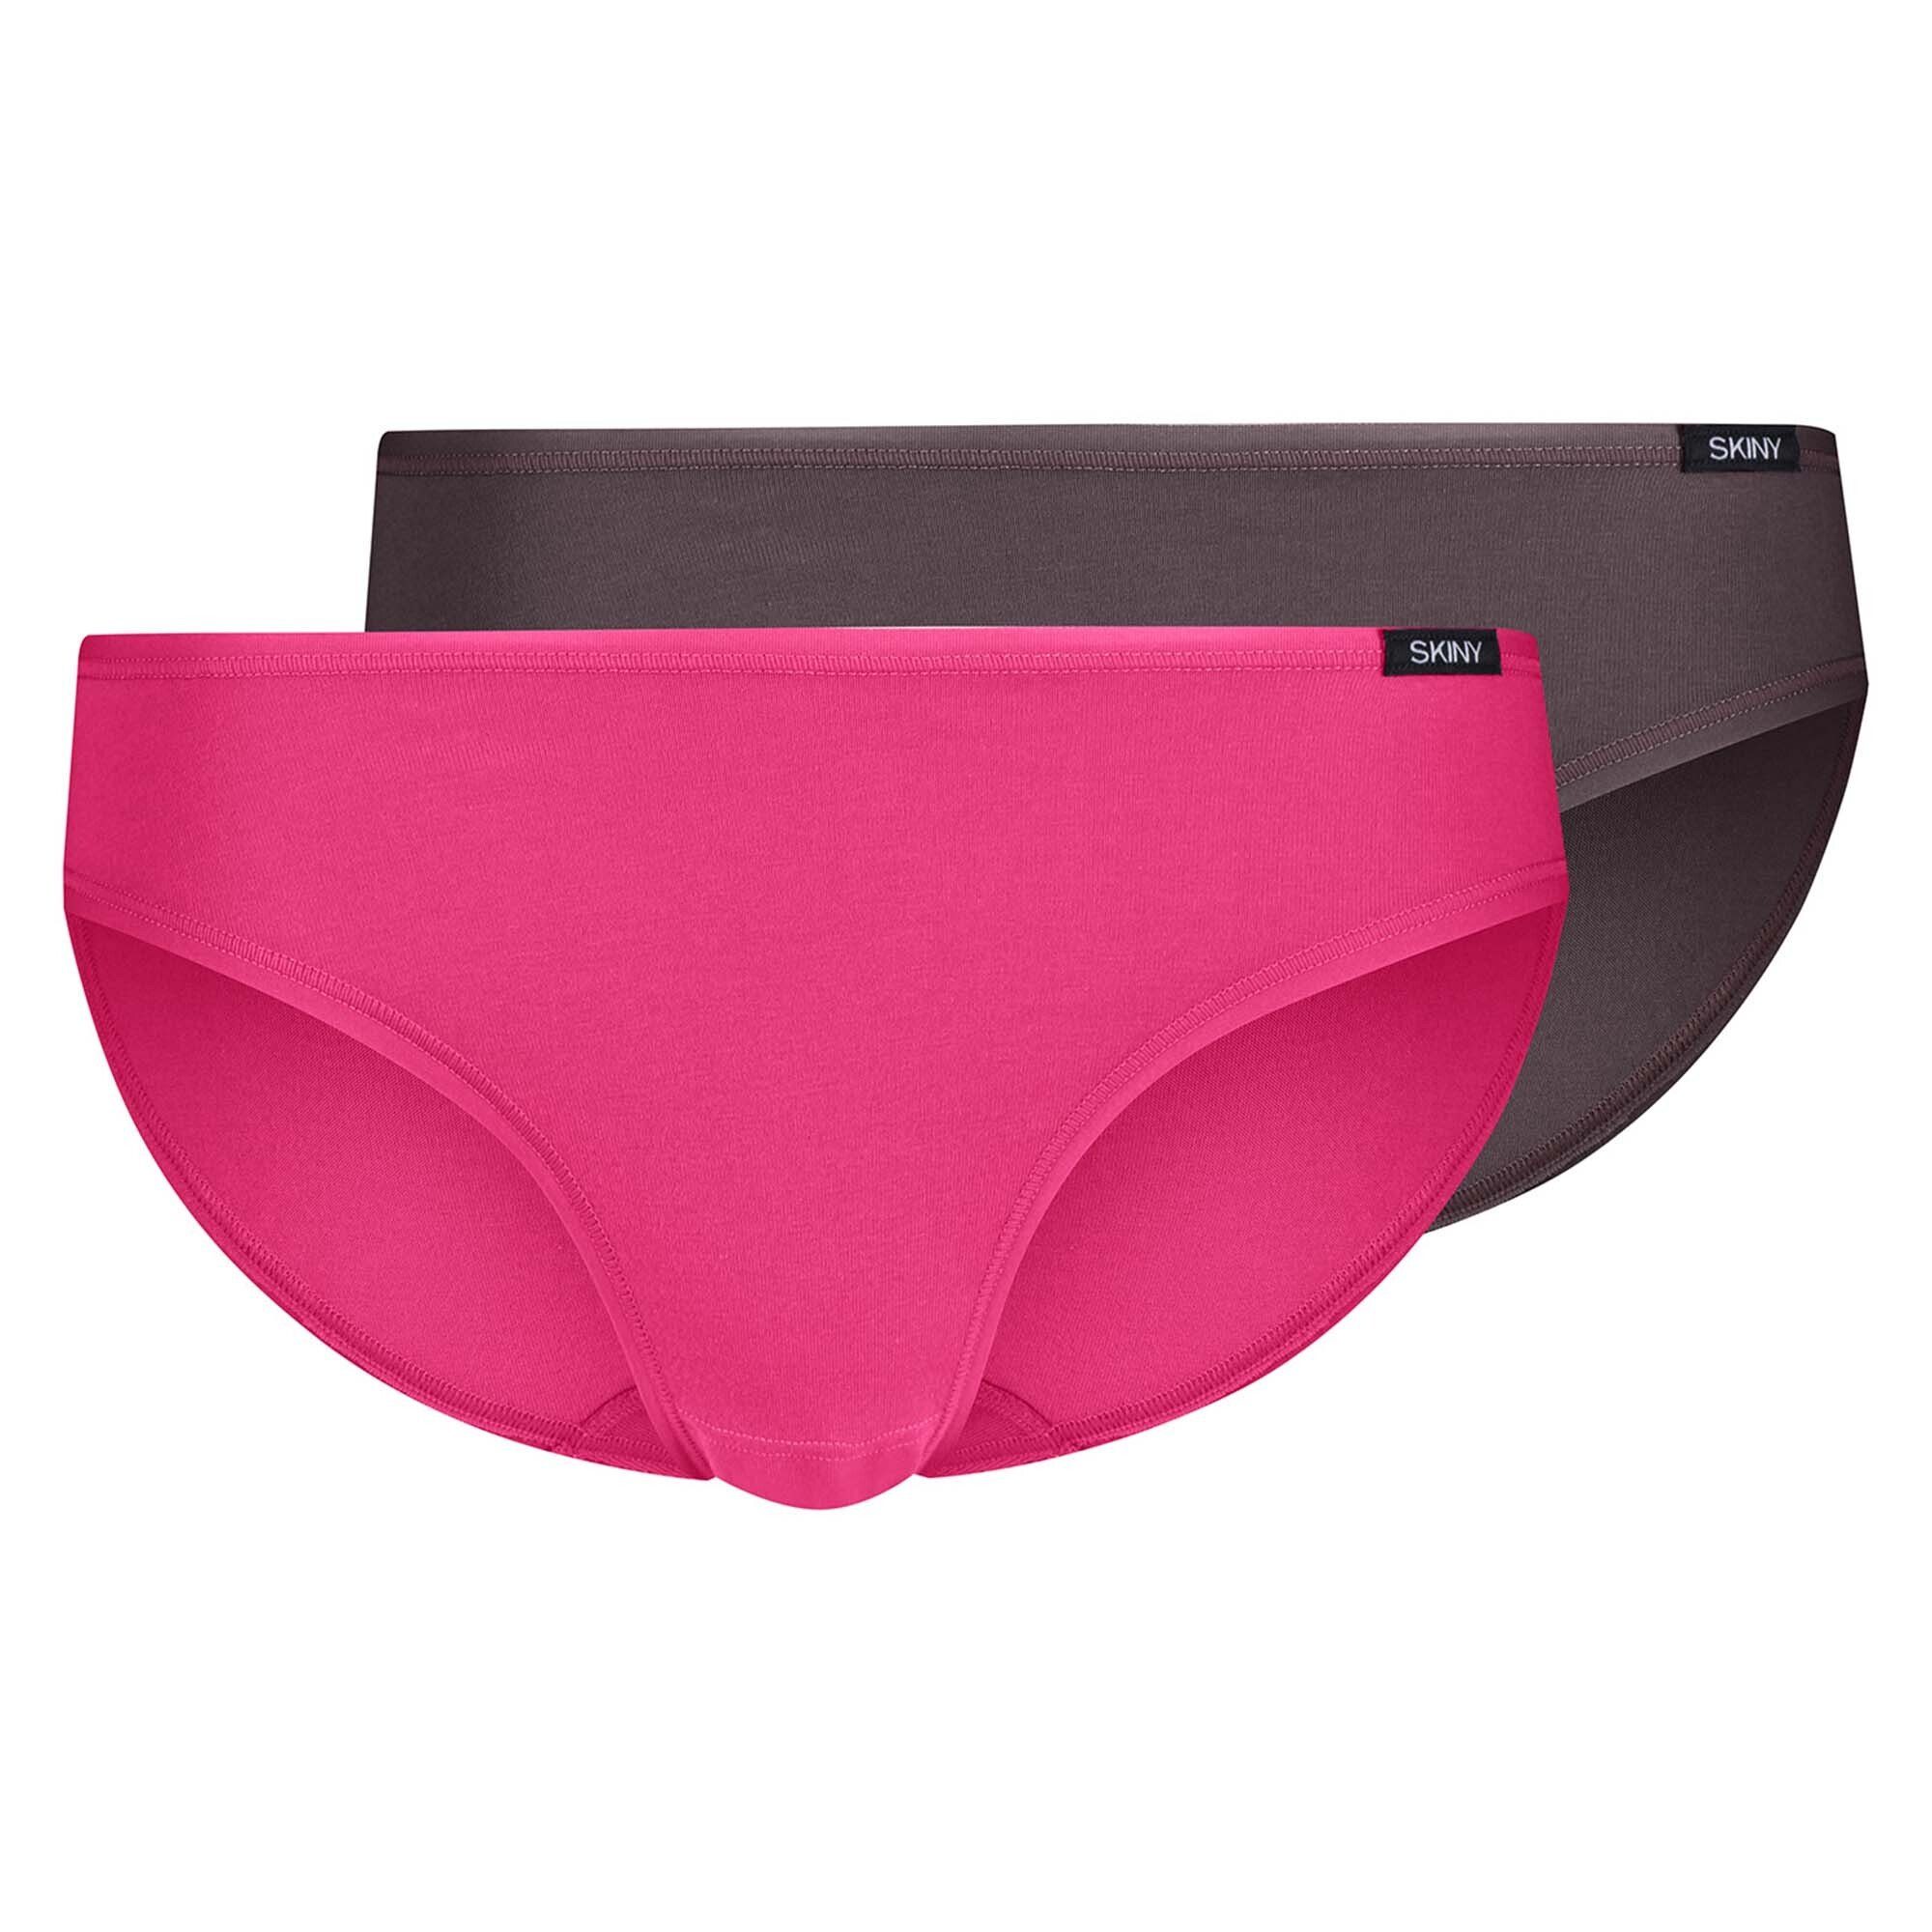 Rio Damen Slip, Bikini Pack Cotton Slip, Slip - Pink/Taupe Skiny 2er